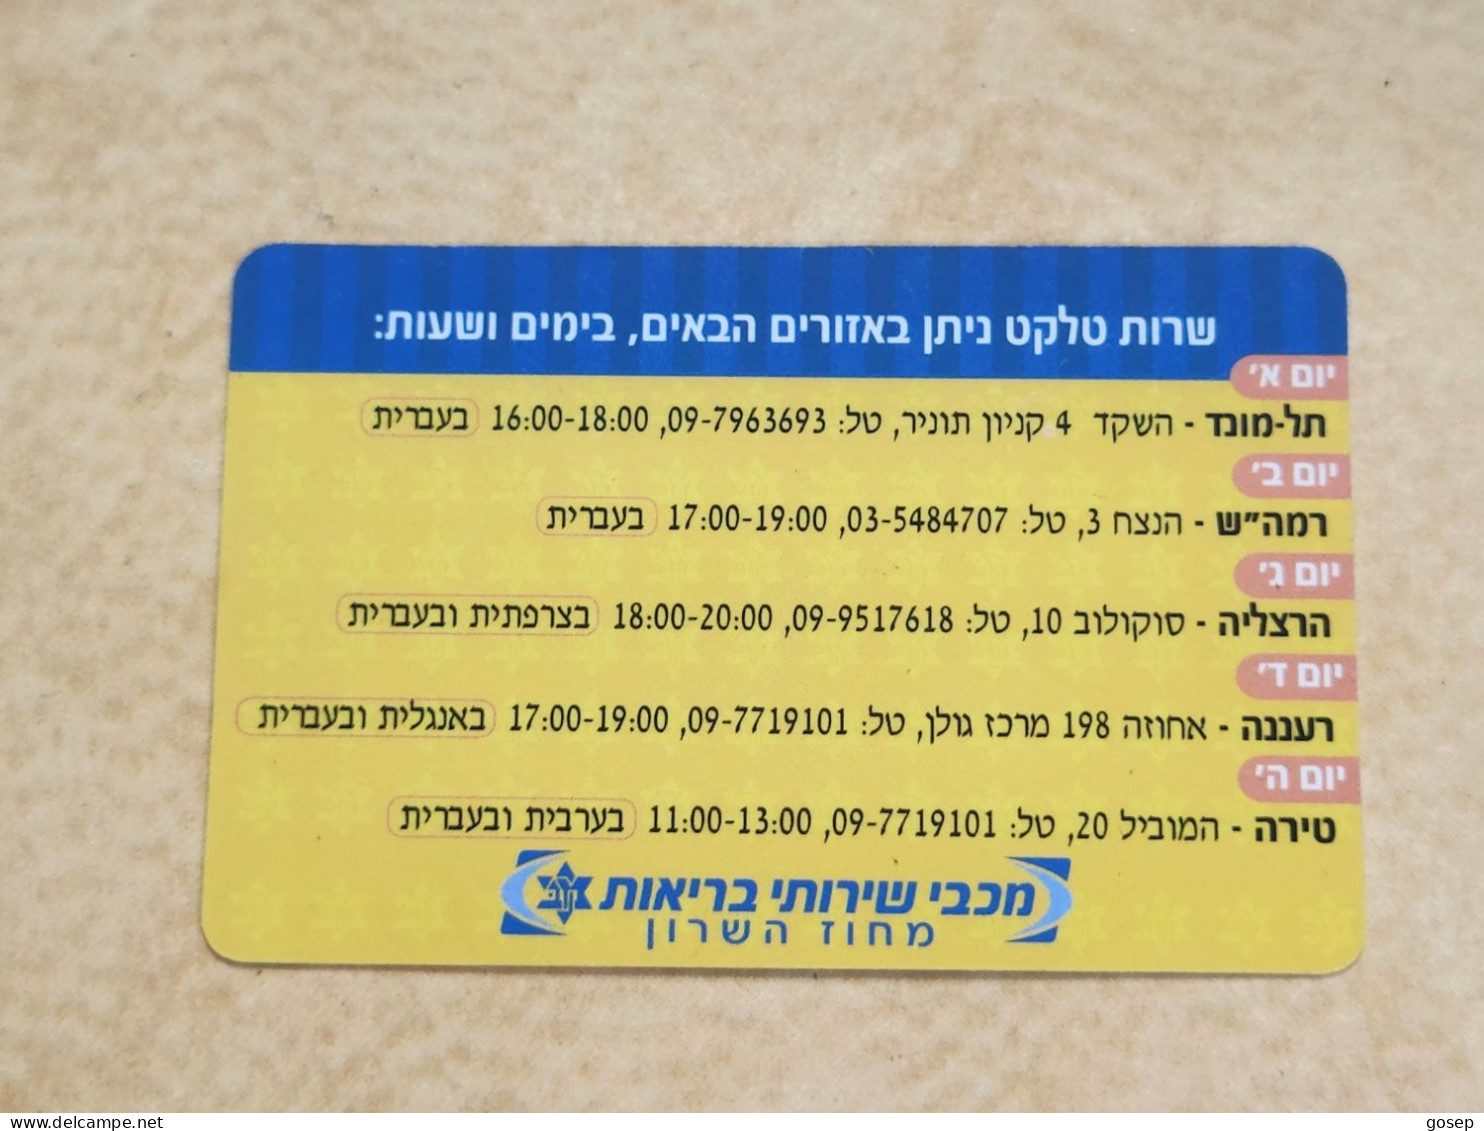 ISRAEL-Maccabi HMO Health Services -operators Of Card,-visit Branches-(11)good Card+1card,prepiad Free - Medical & Dental Equipment